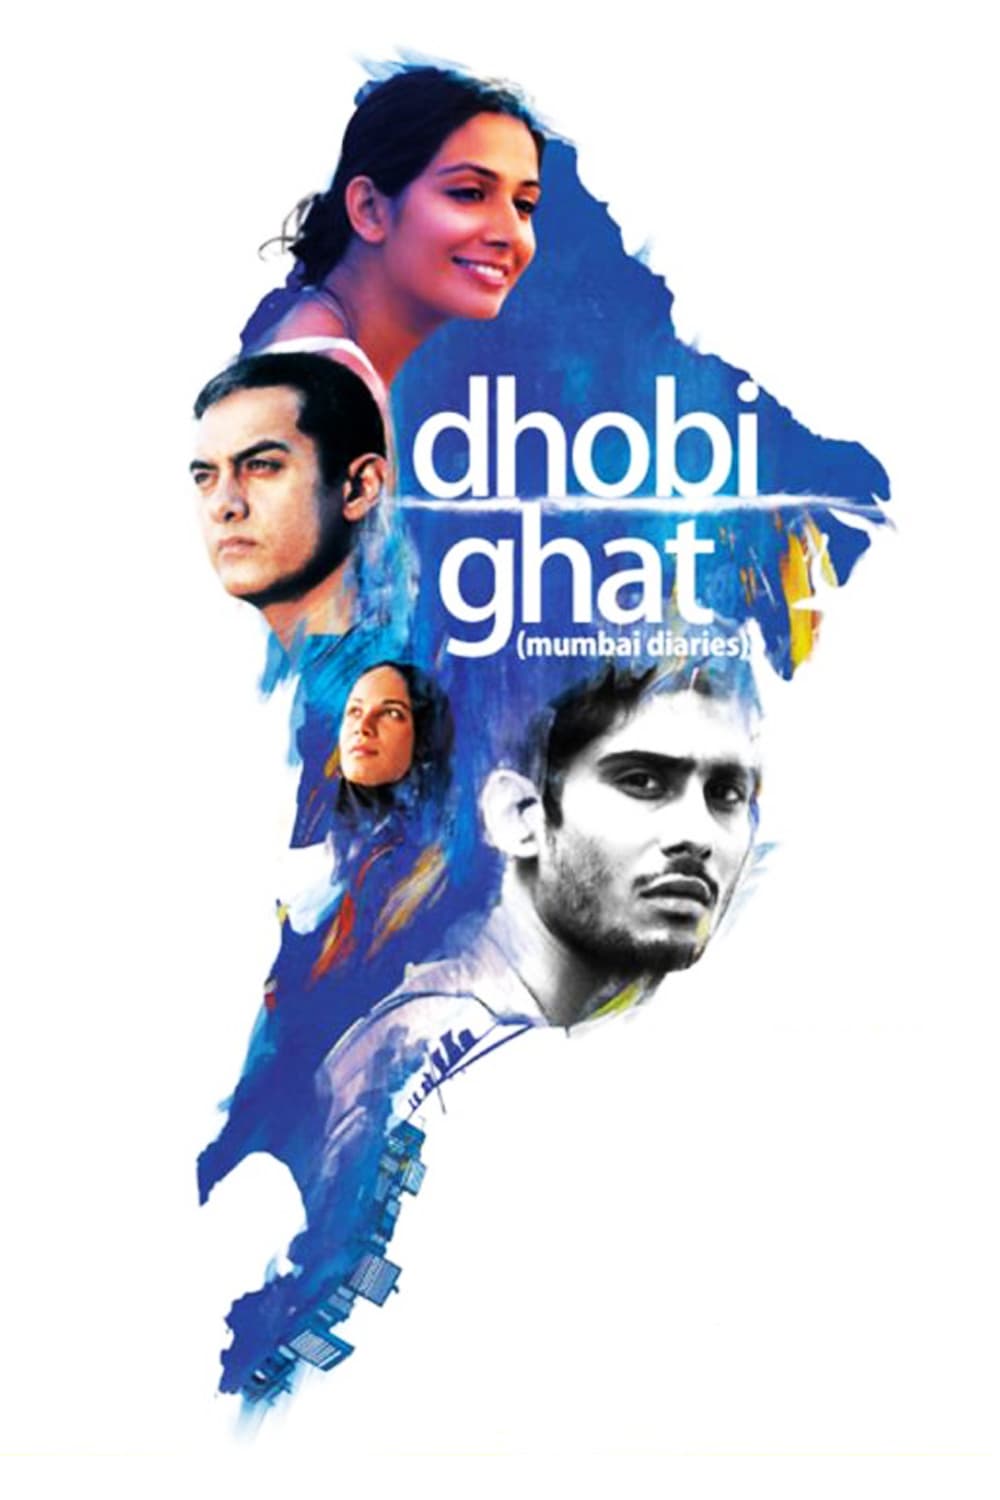 Poster for the movie "Mumbai Diaries"